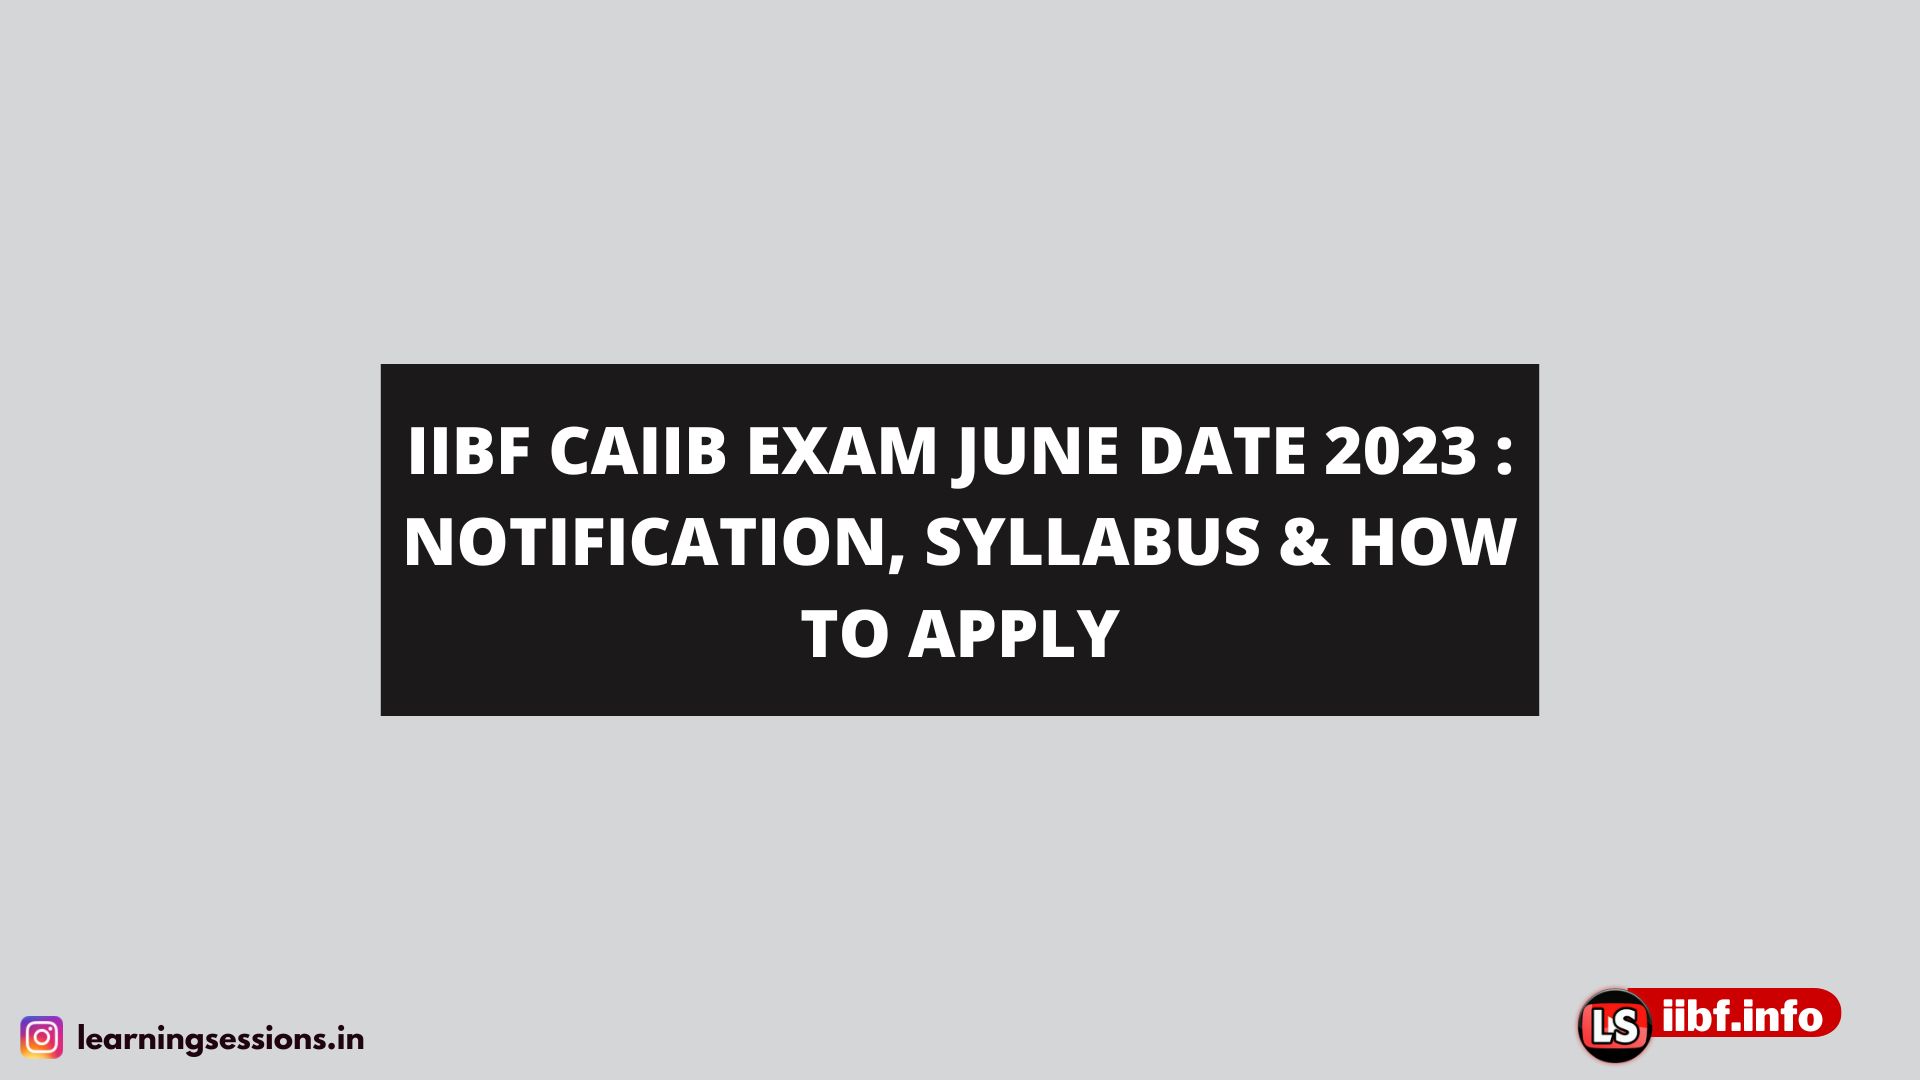 IIBF CAIIB EXAM DATE 2022: NOTIFICATION, SYLLABUS & HOW TO APPLY